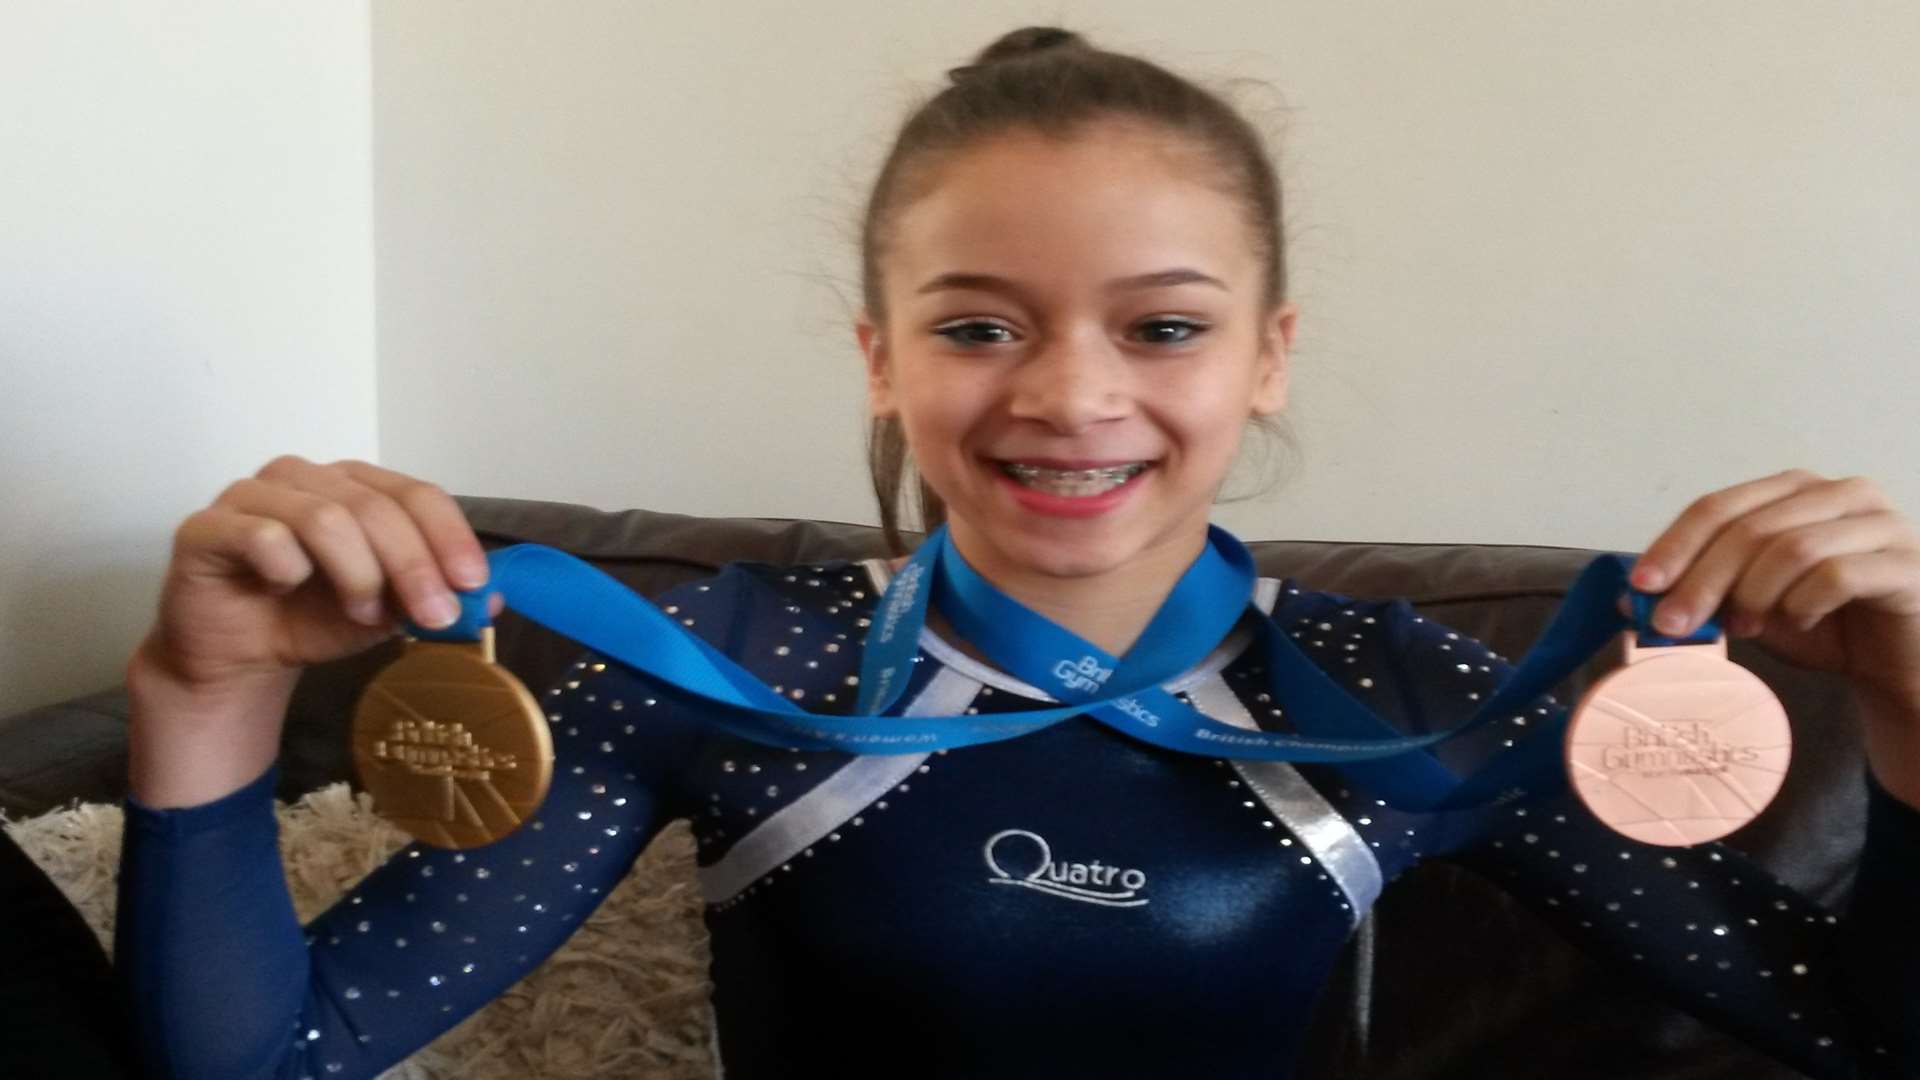 Georgia-Mae won gold and bronze at the British Junior Gymnastics Championships 2015